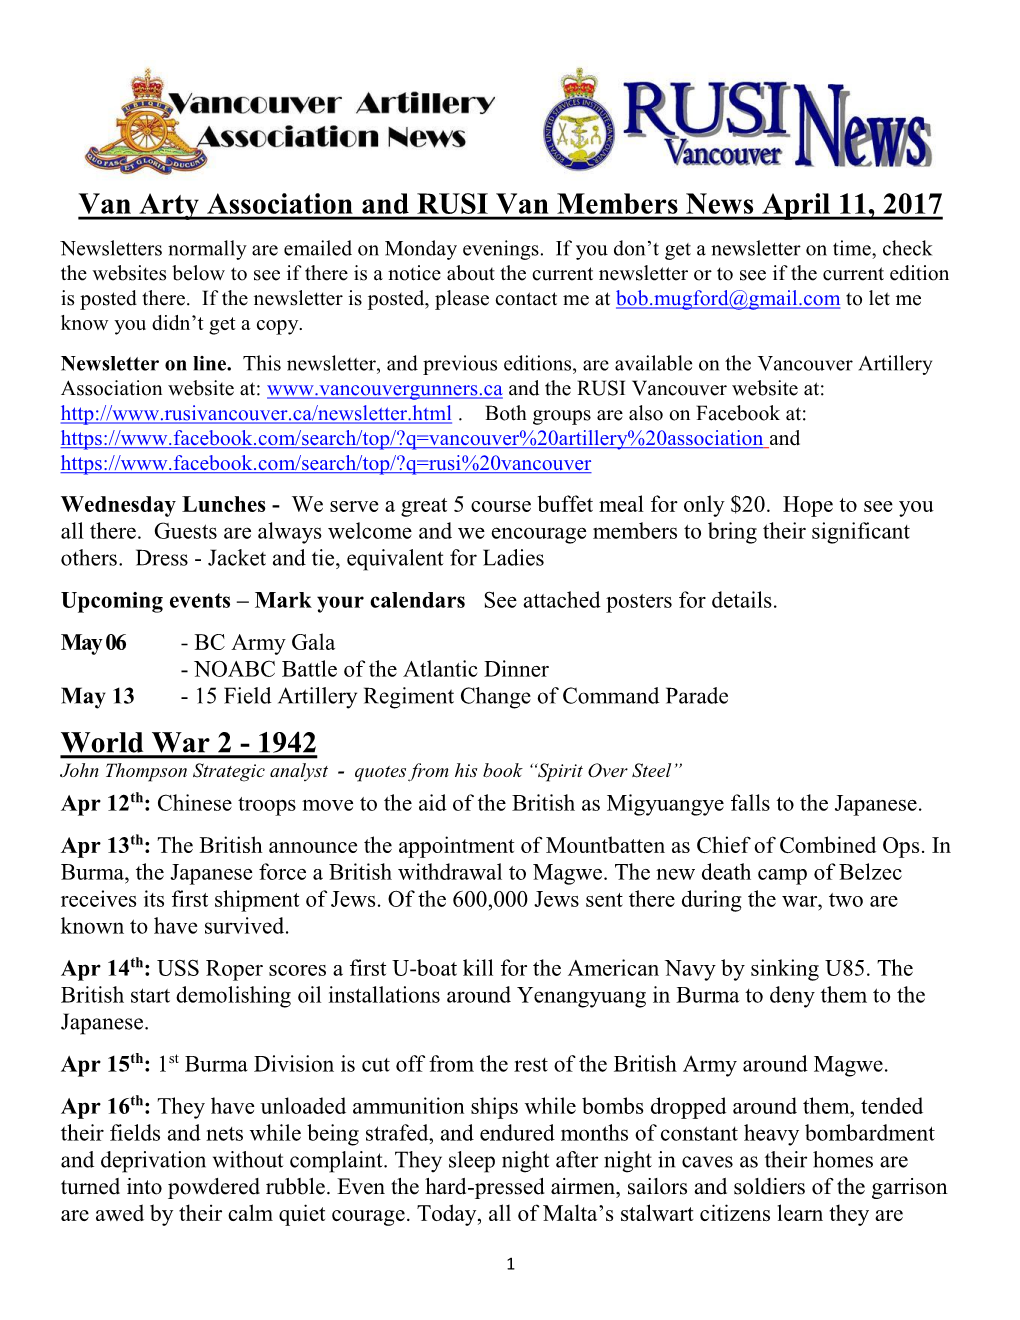 Van Arty Association and RUSI Van Members News April 11, 2017 World War 2